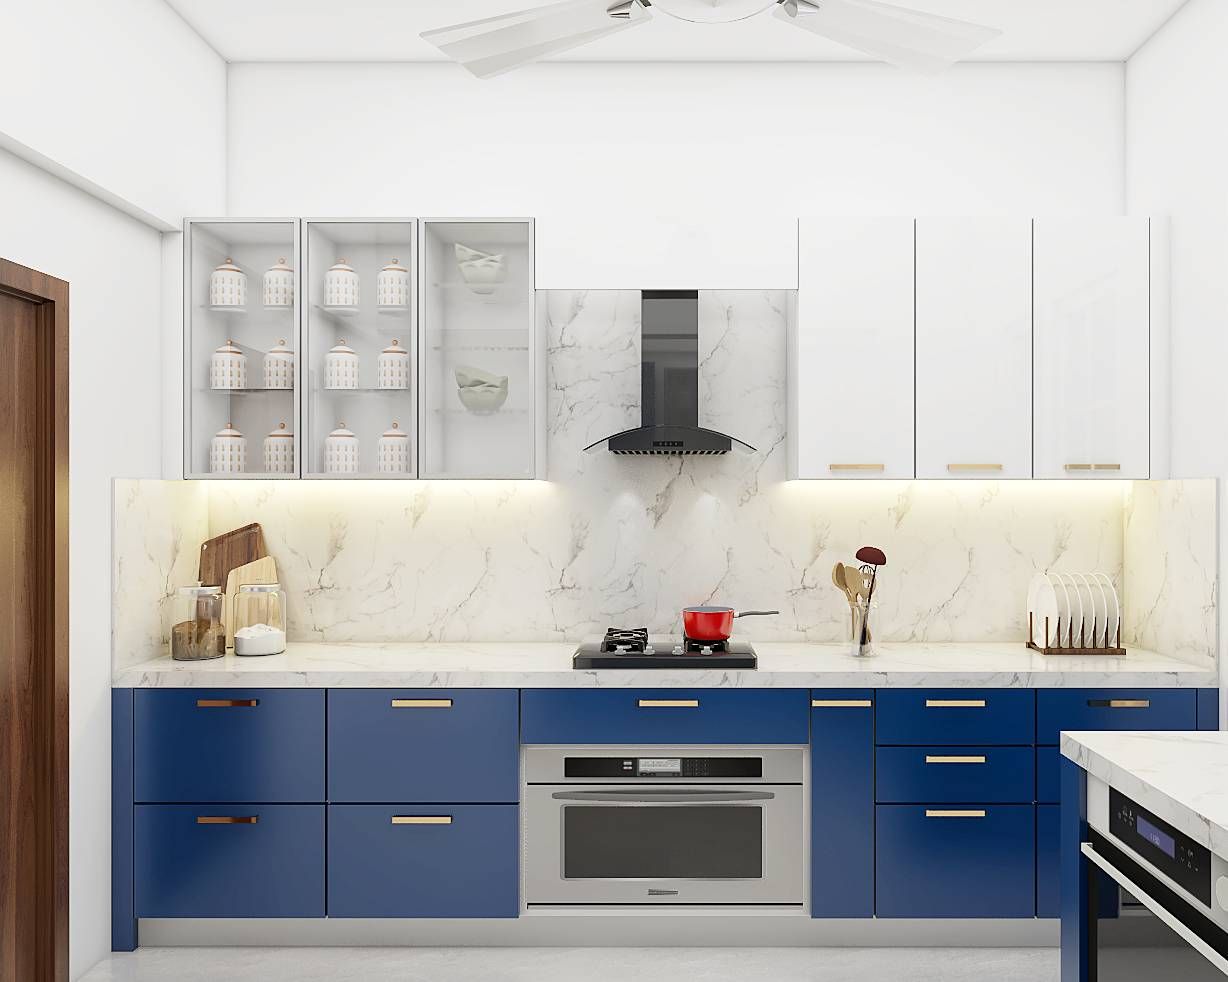 Spacious Modular Kitchen Design In White And Blue